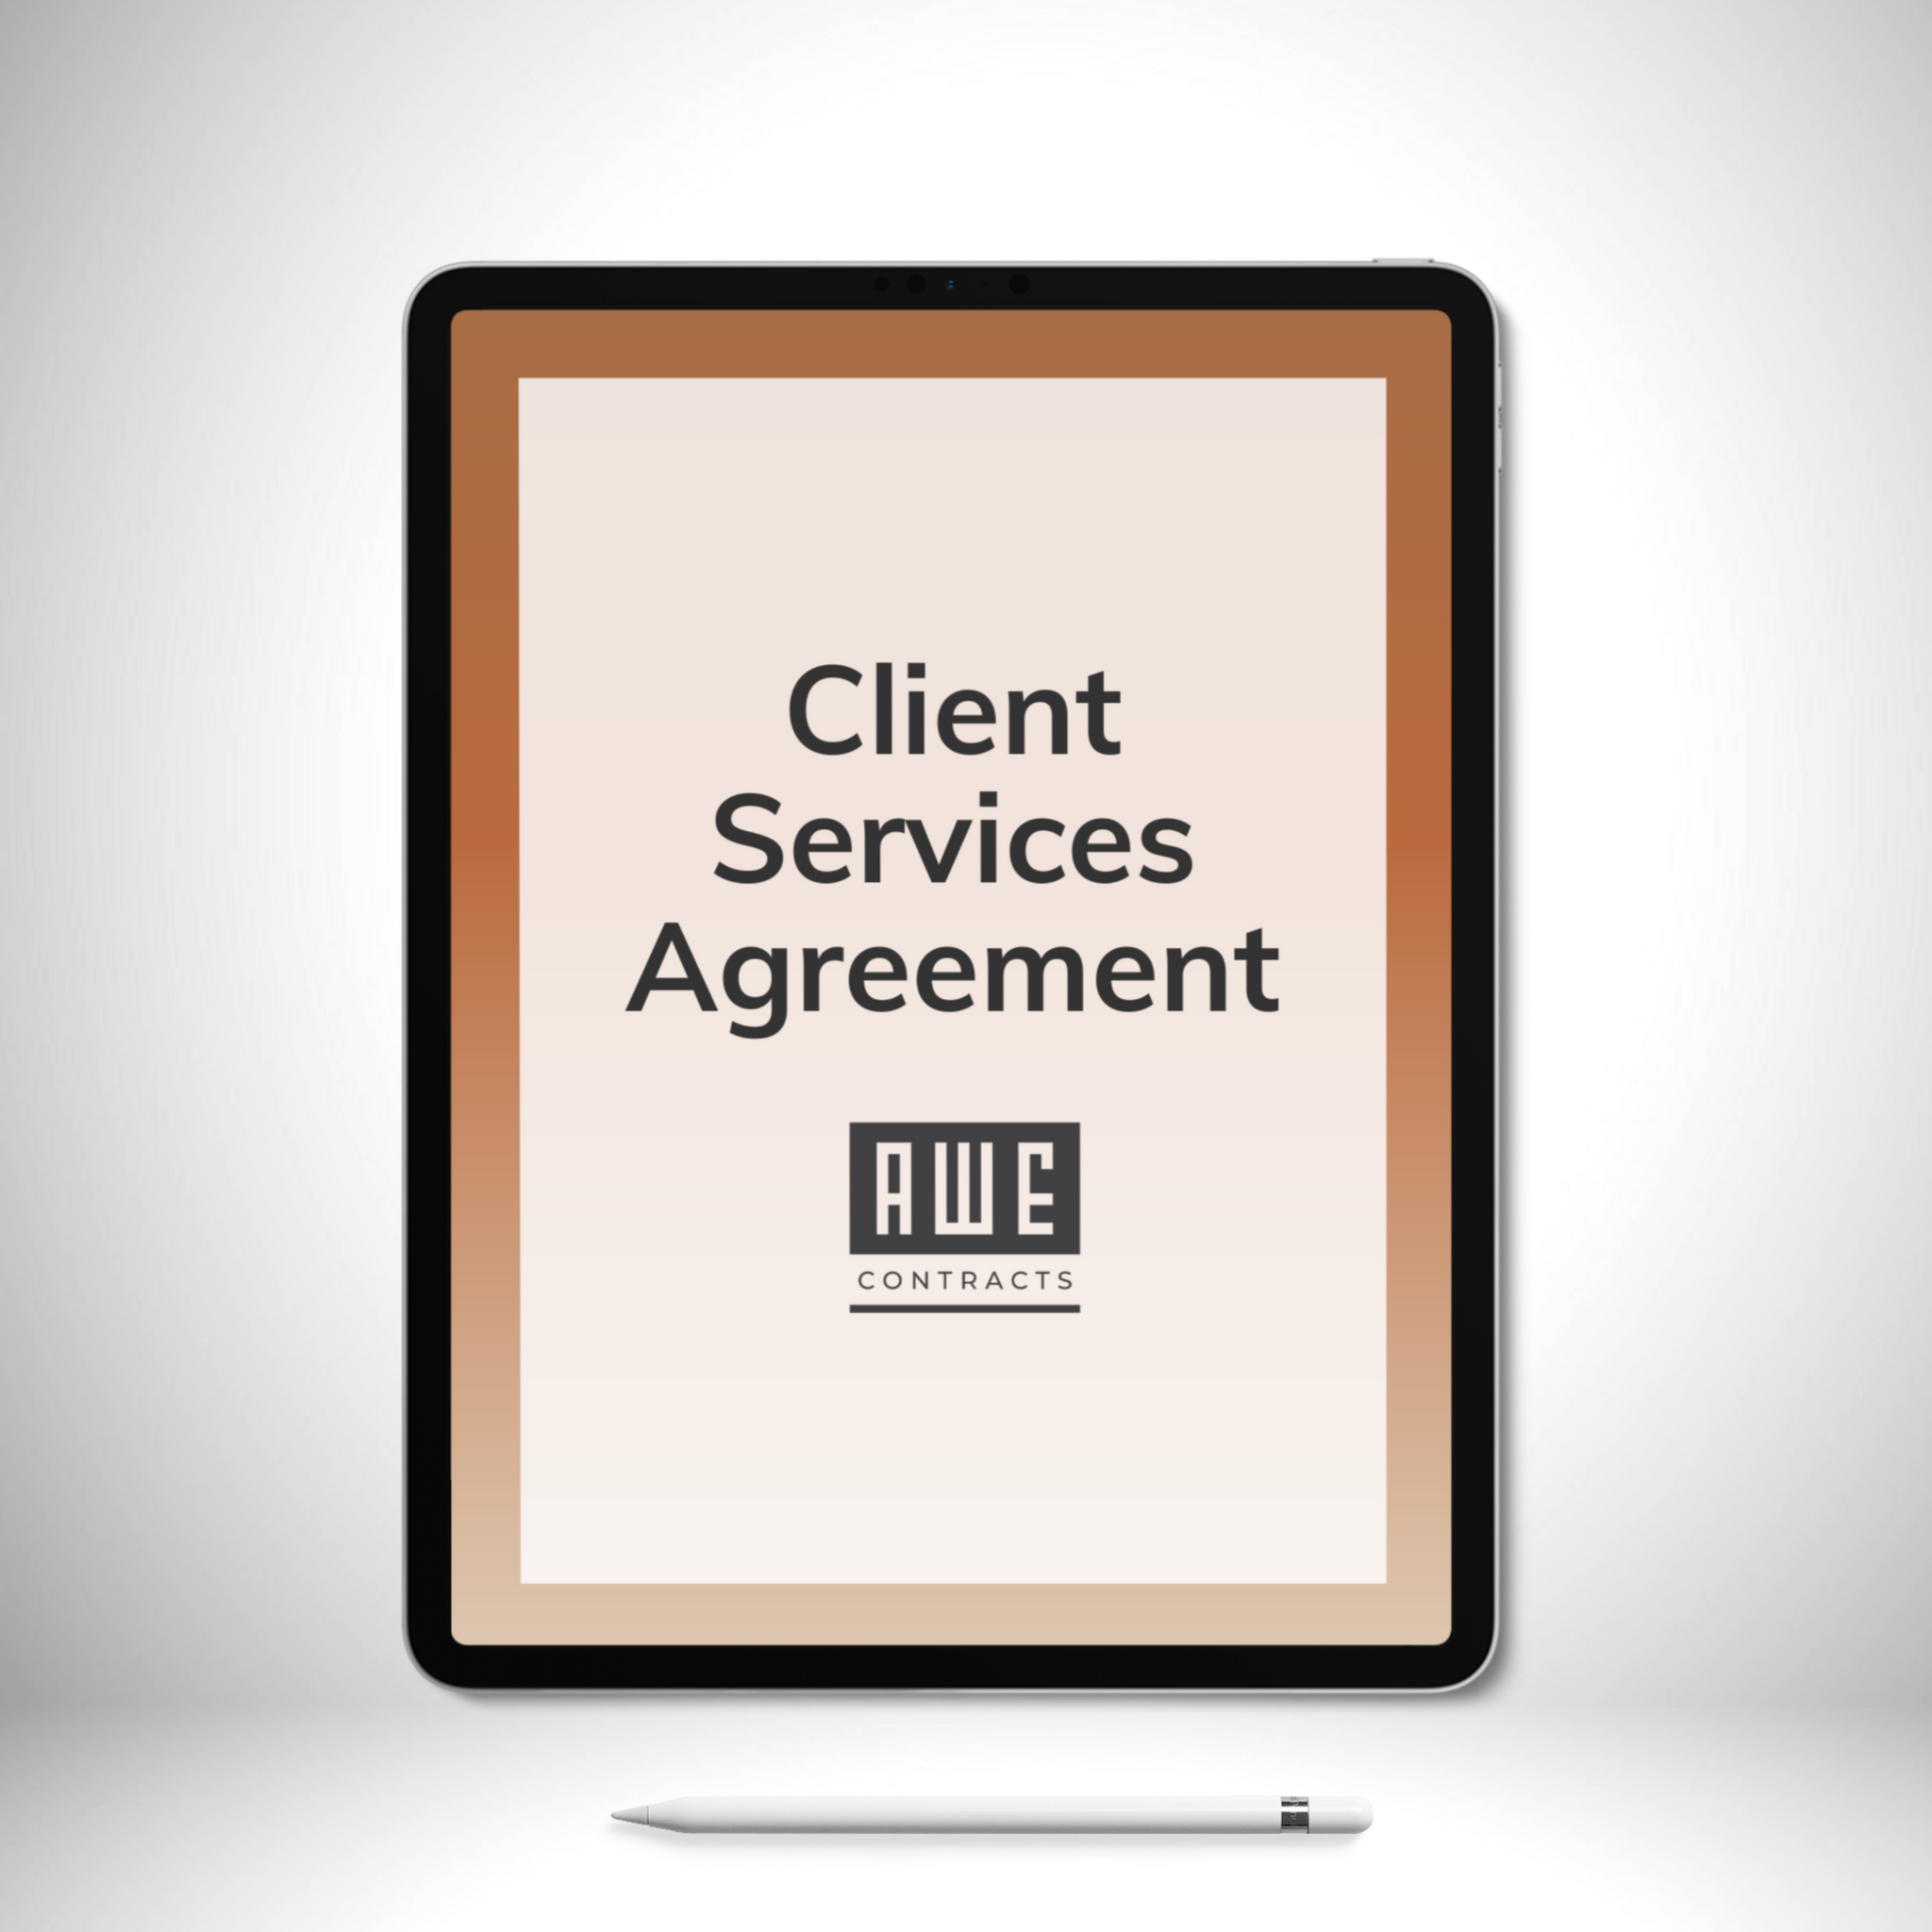 Client Services Agreement